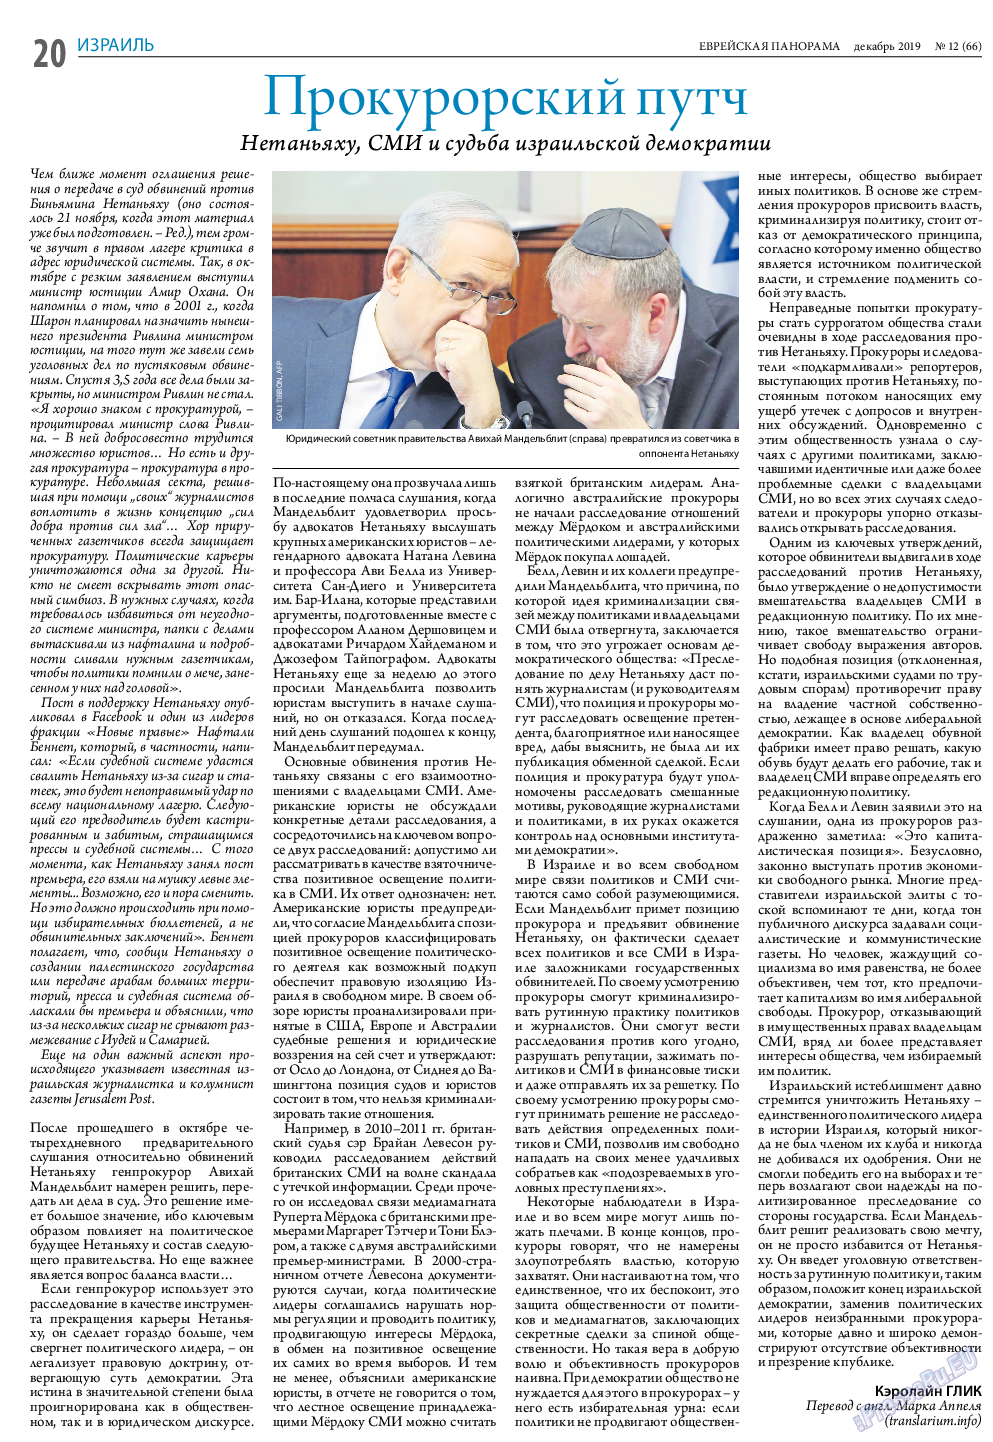 Еврейская панорама, газета. 2019 №12 стр.20